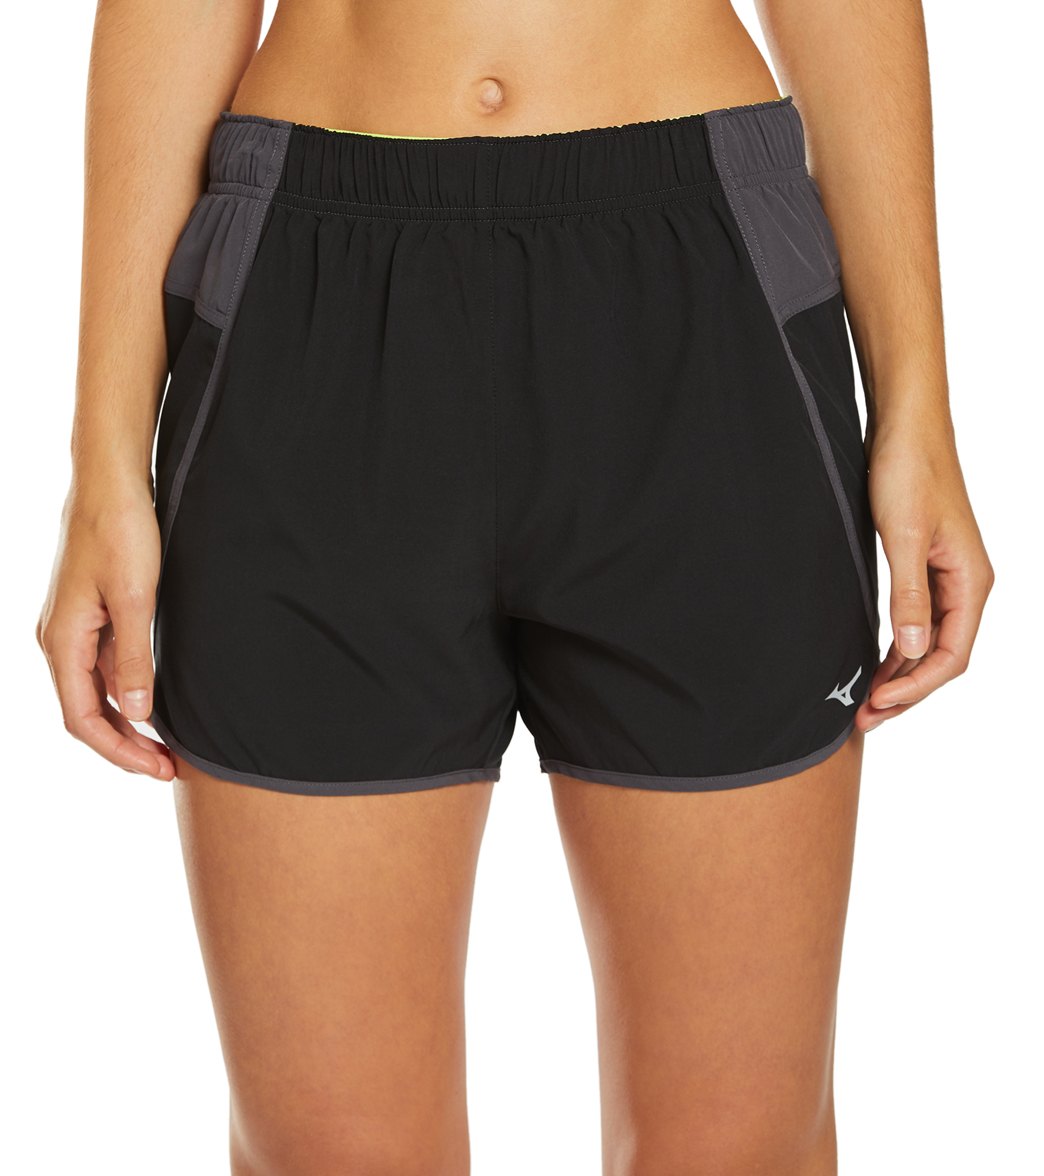 mizuno black volleyball shorts